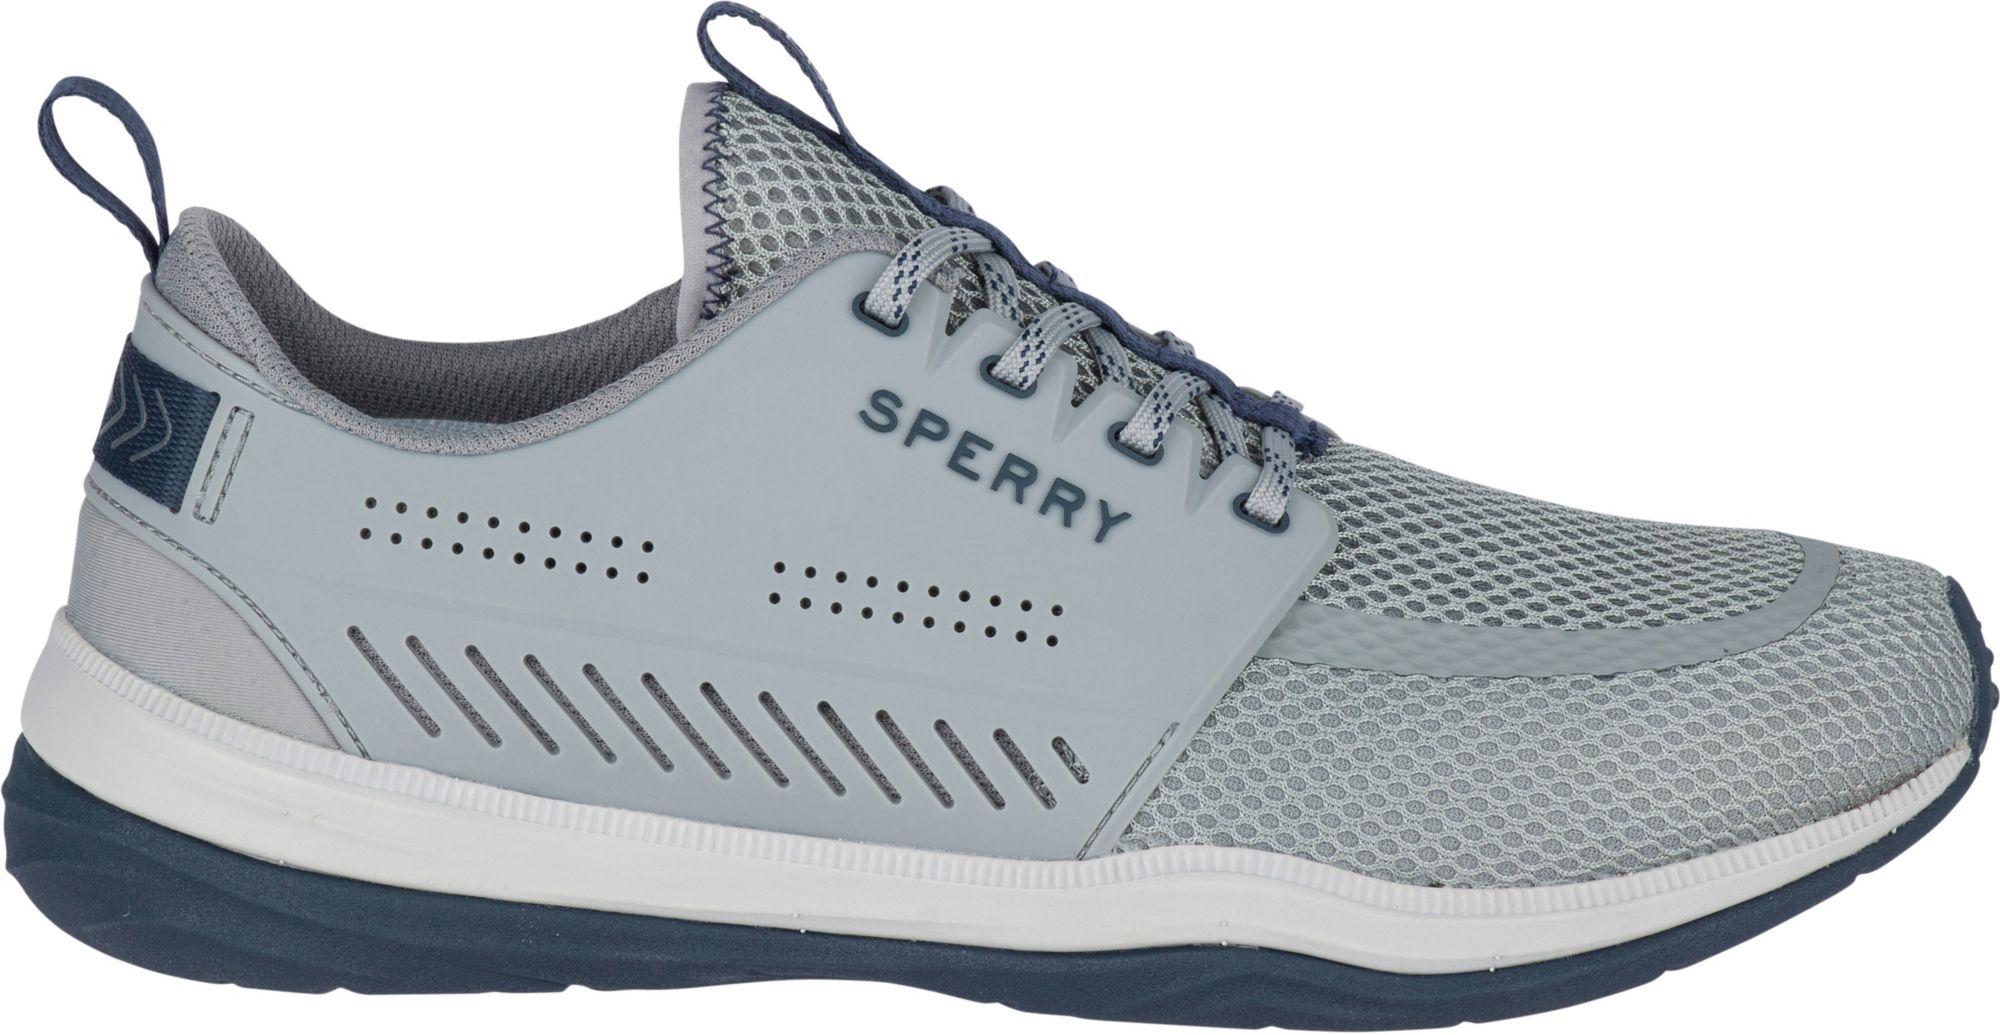 sperry men's water shoes